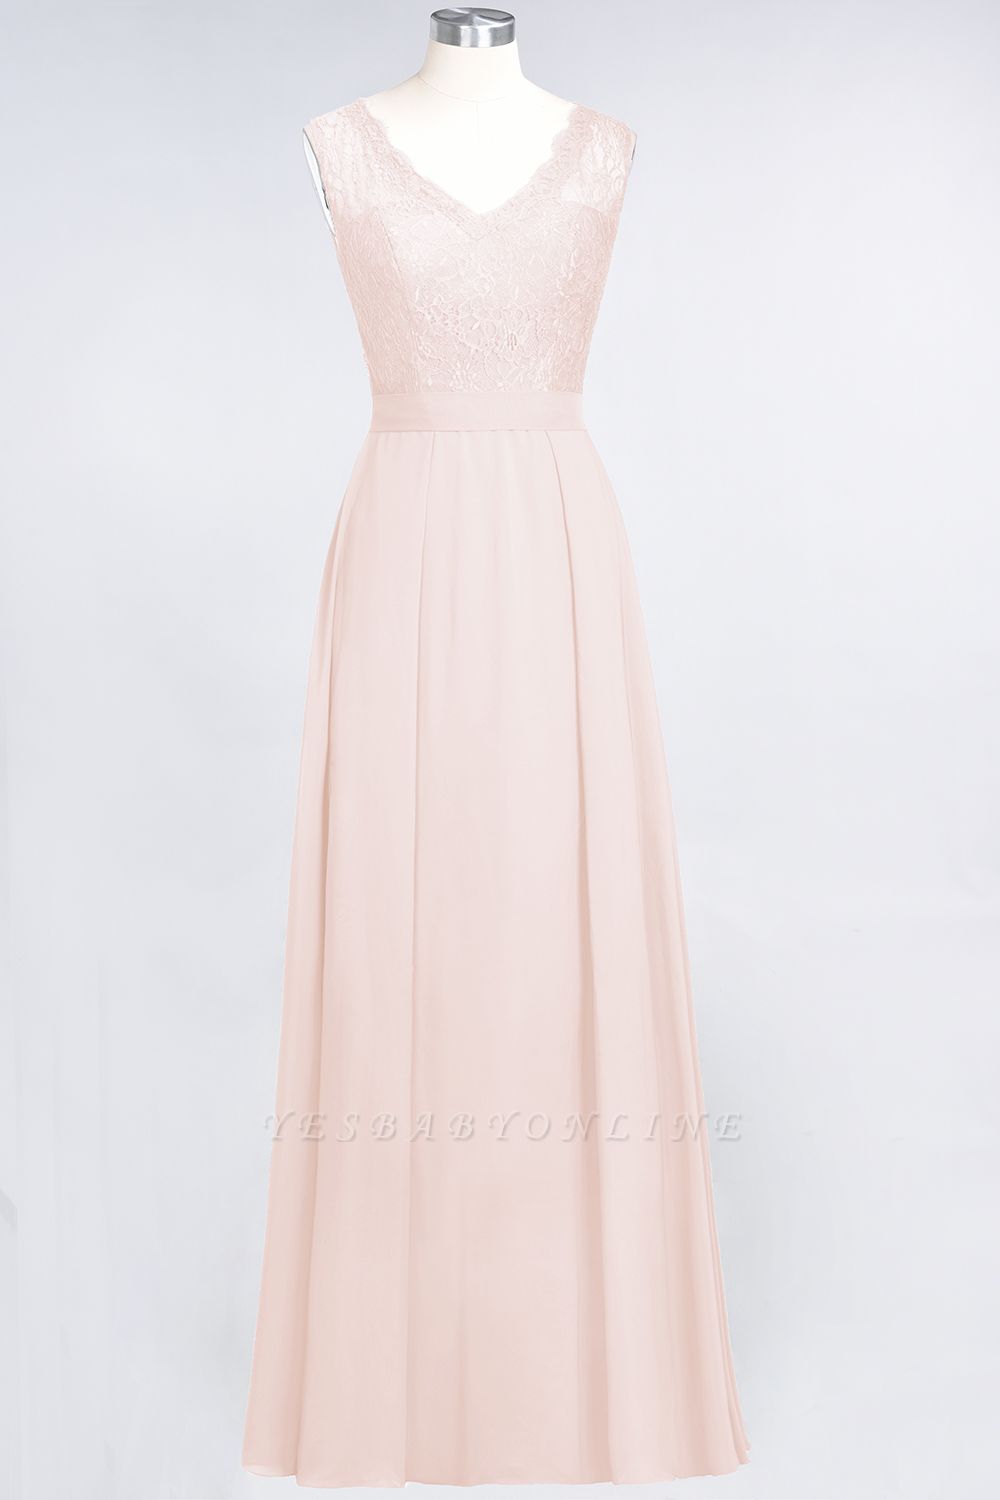 A-Line V-Neck Sleeveless Floor-Length  Lace Bridesmaid Dress